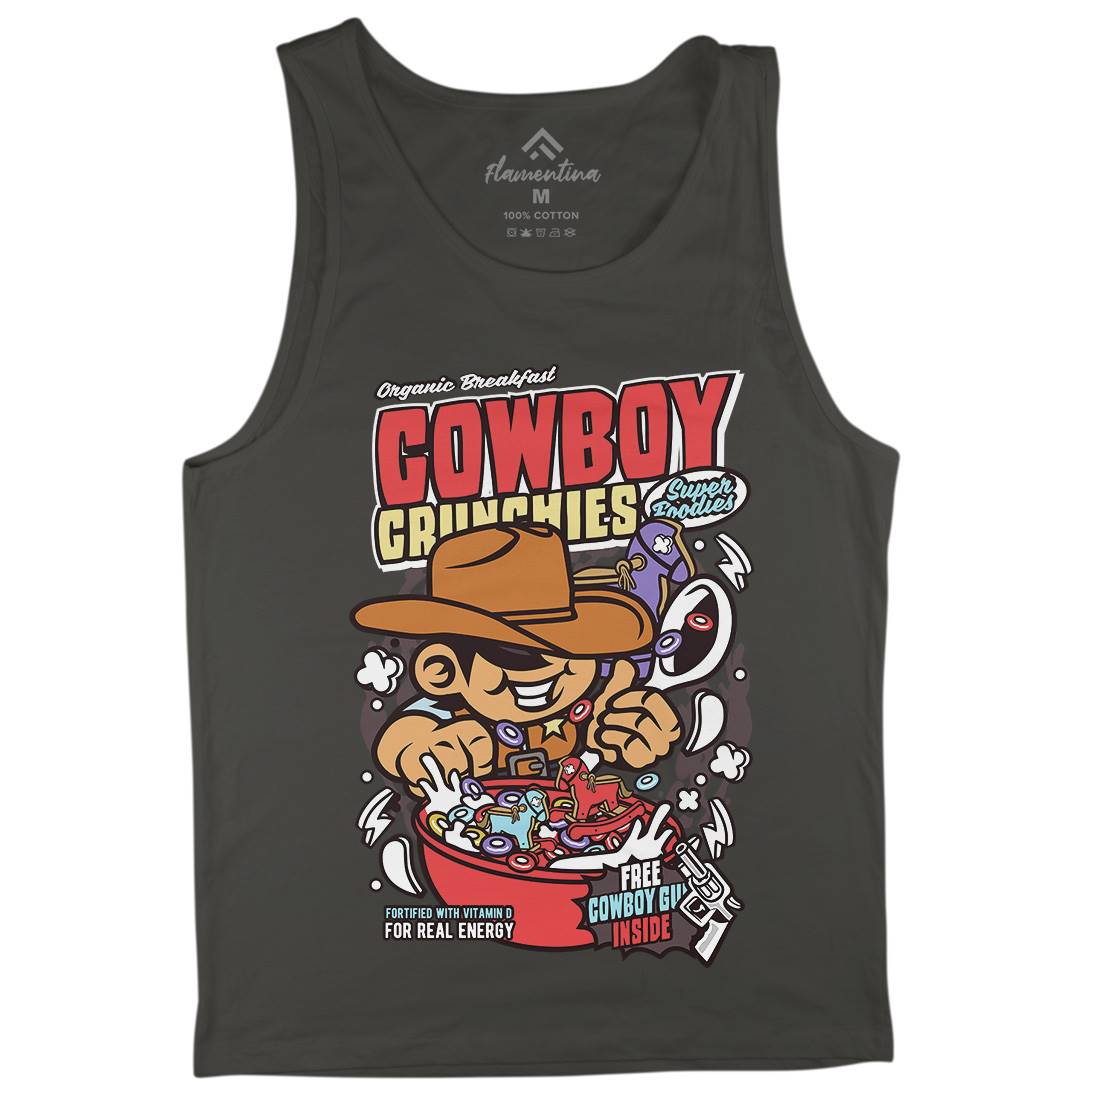 Cowboy Crunchies Mens Tank Top Vest Food C529